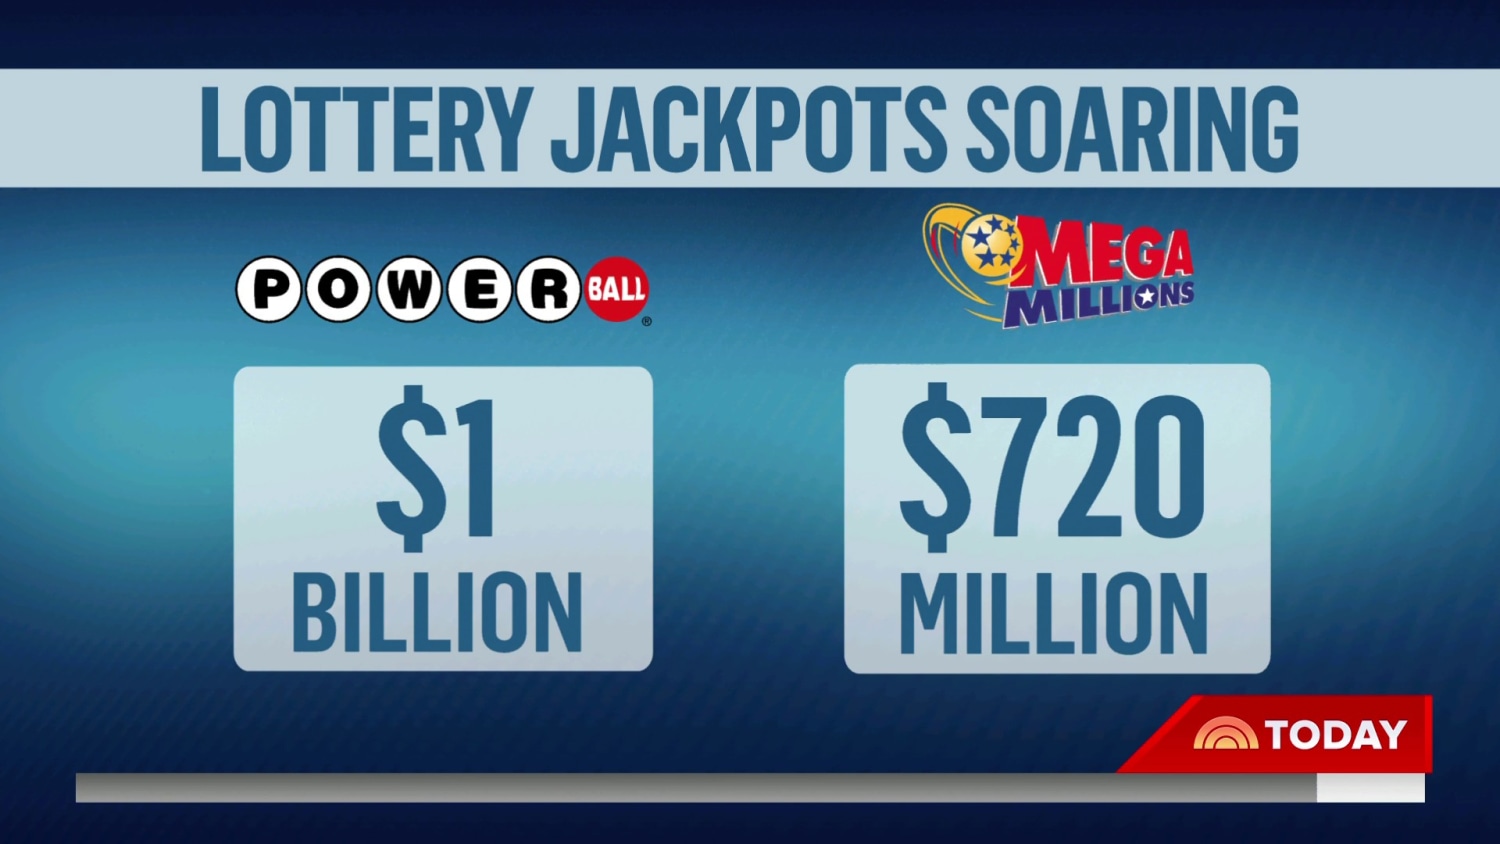 Powerball, Mega Millions jackpots now offer $863 million in total winnings